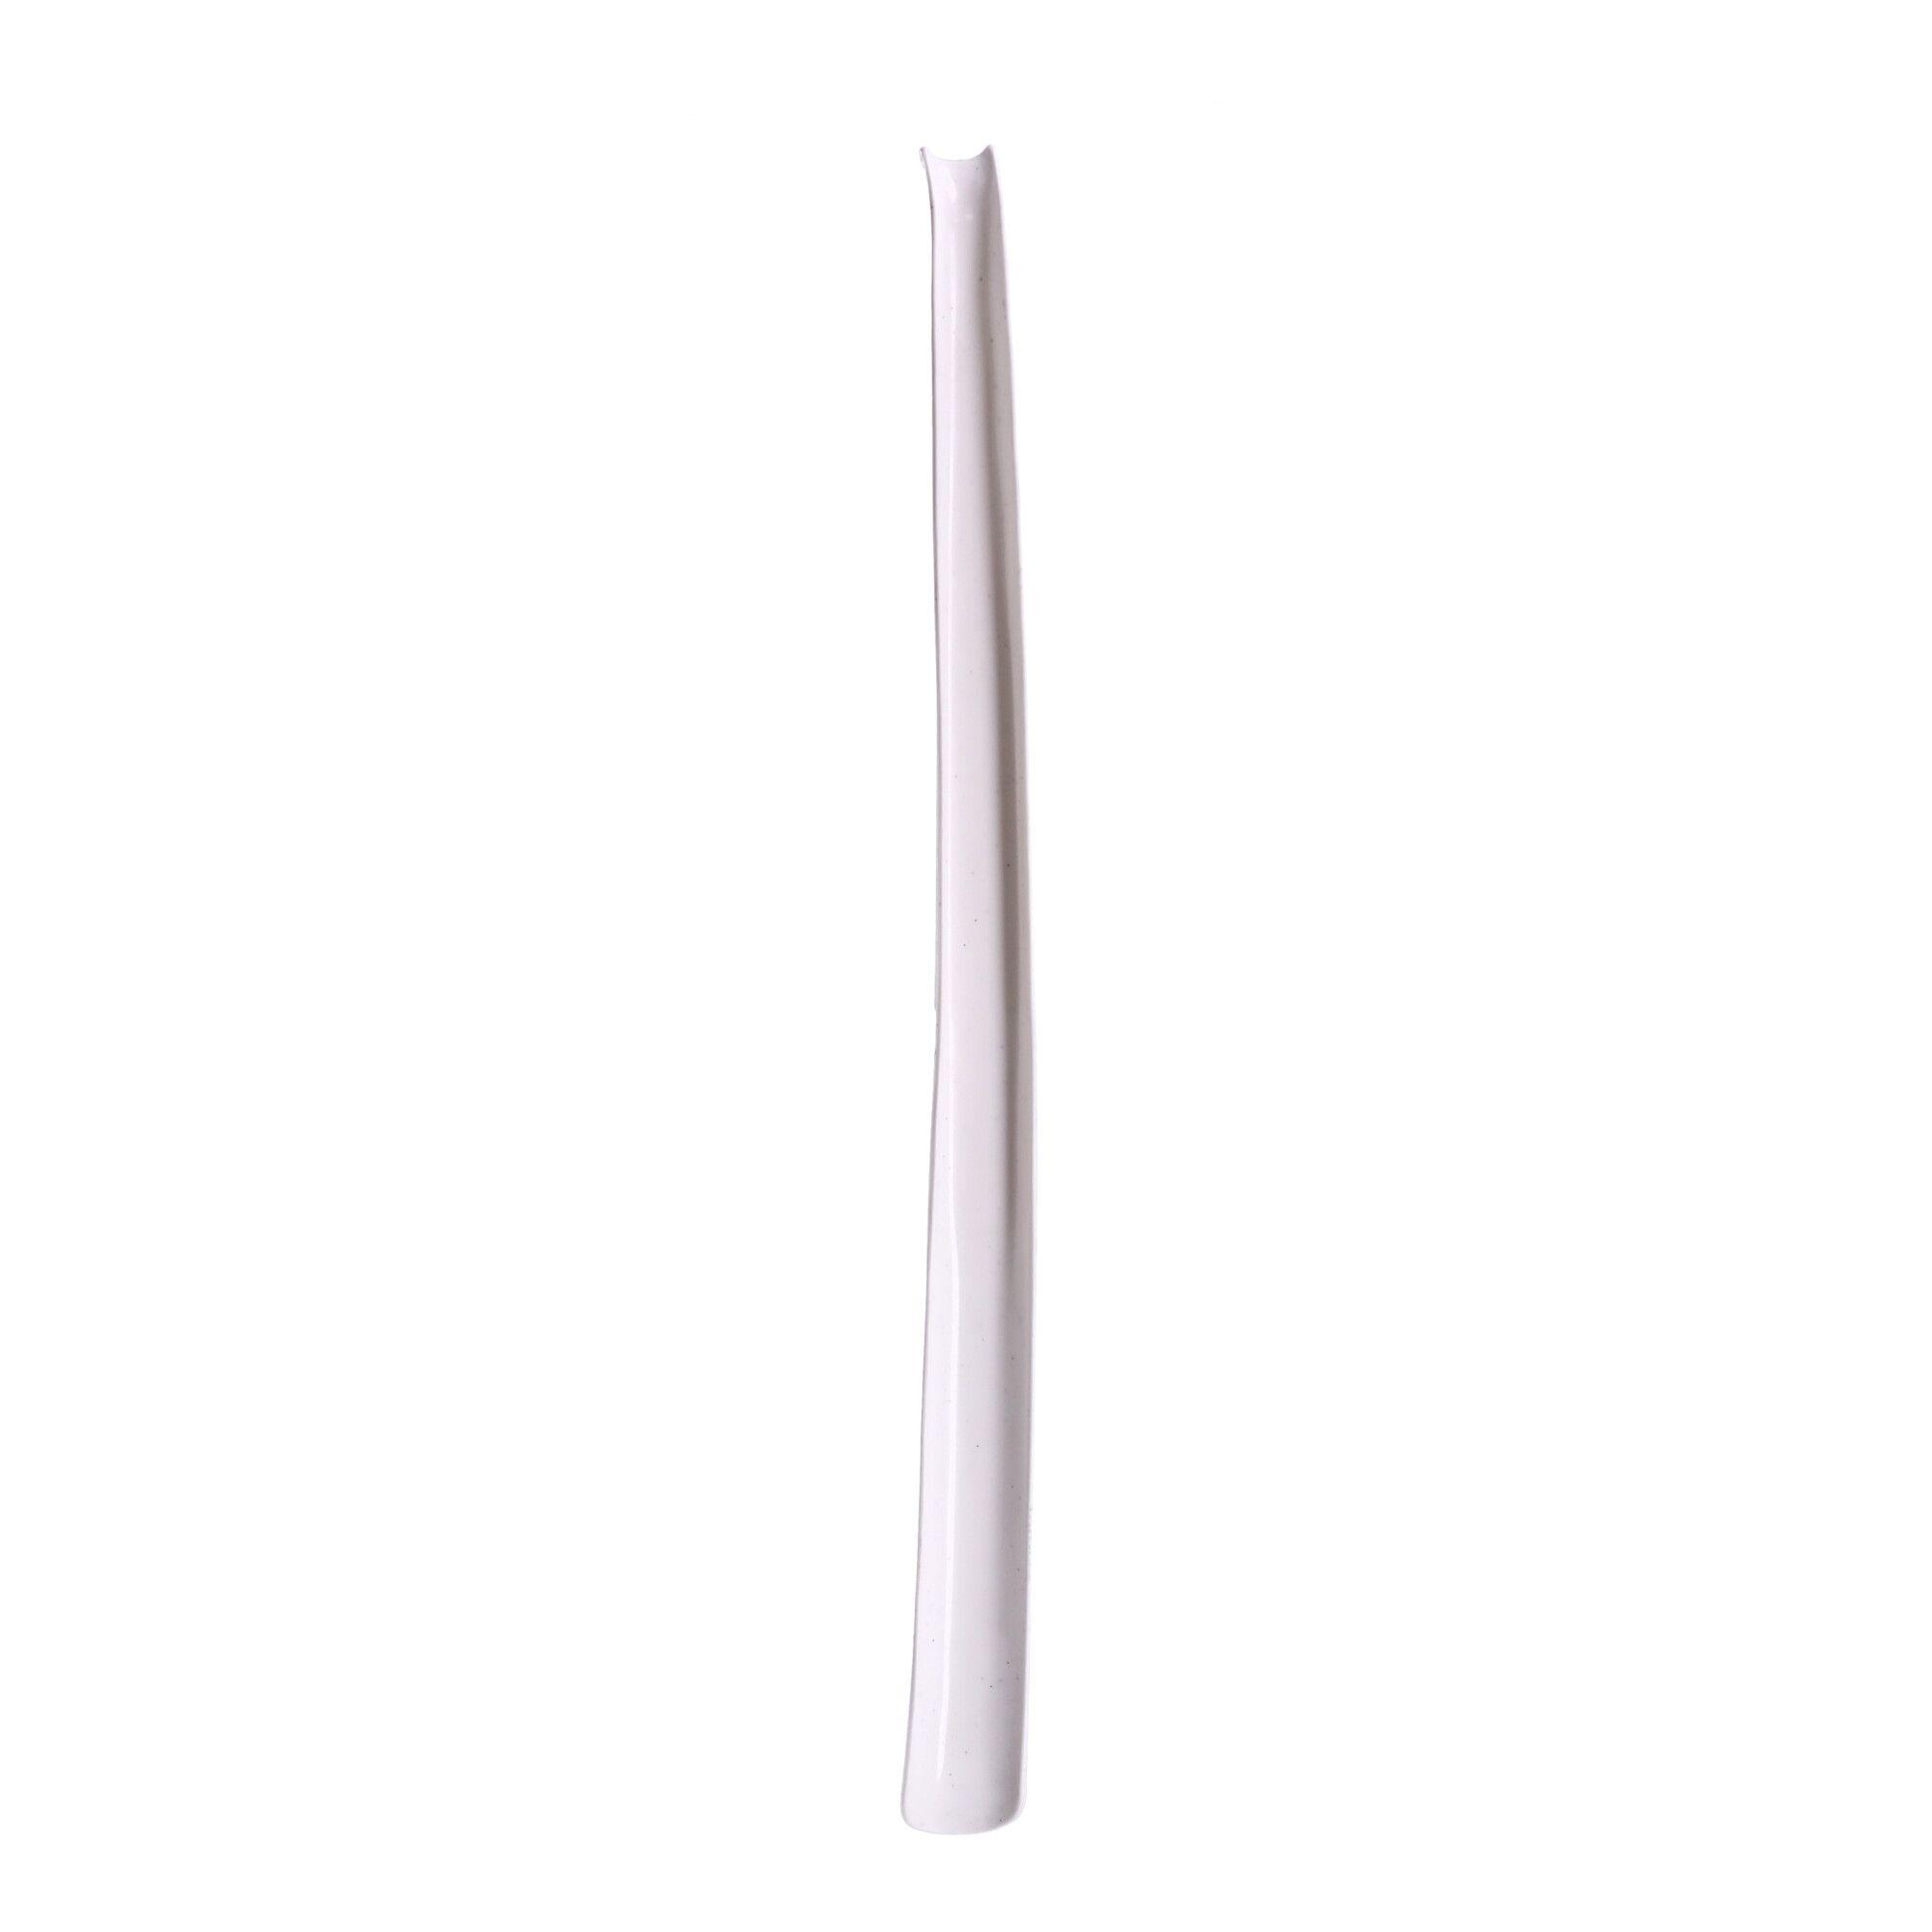 Shoehorn B001 long made of polypropylene - white